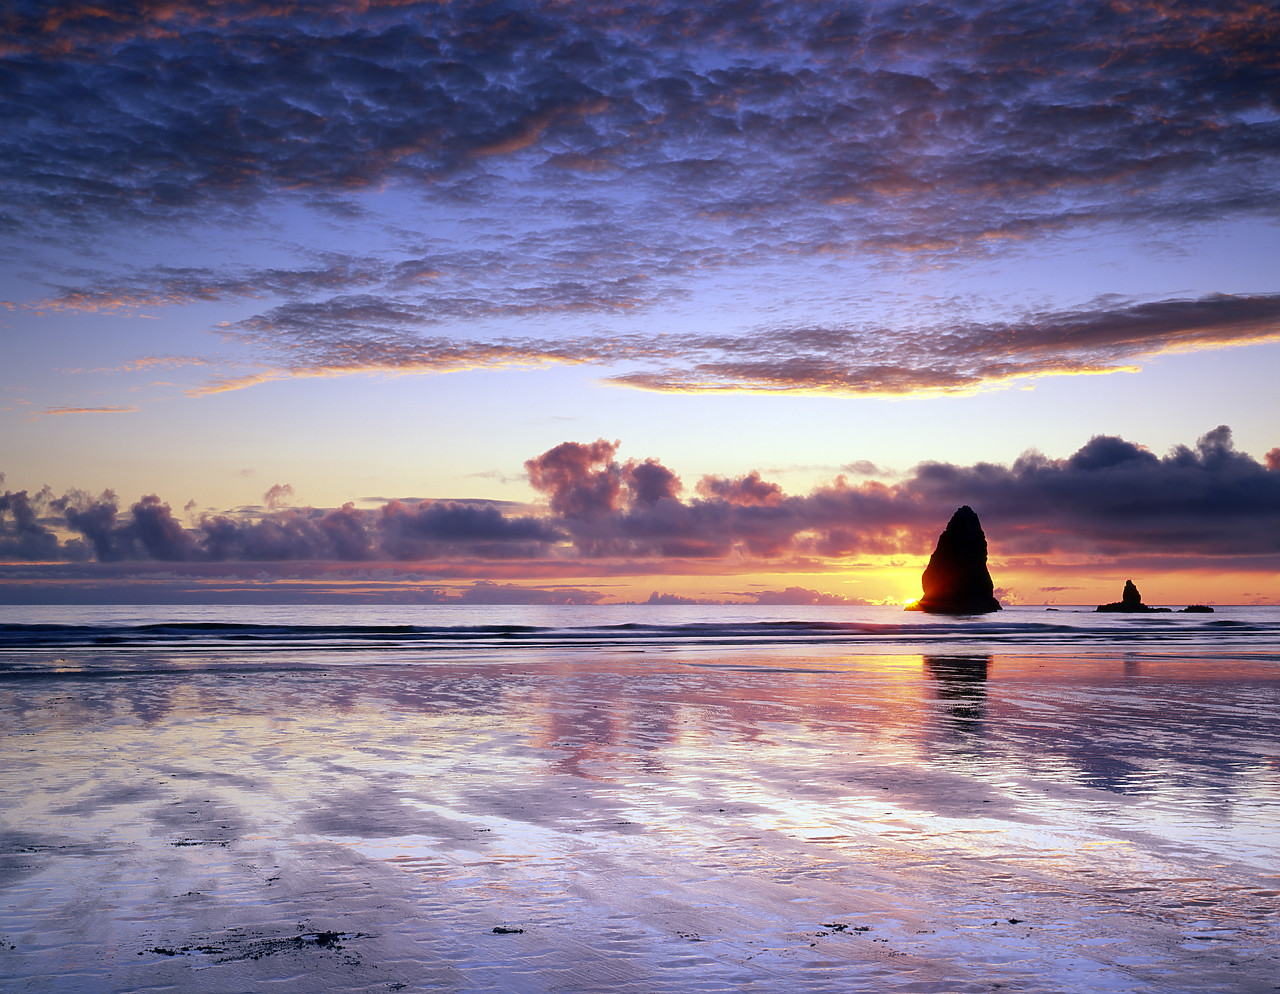 #070384-1 - Cannon Beach at Sunset, Oregon, USA